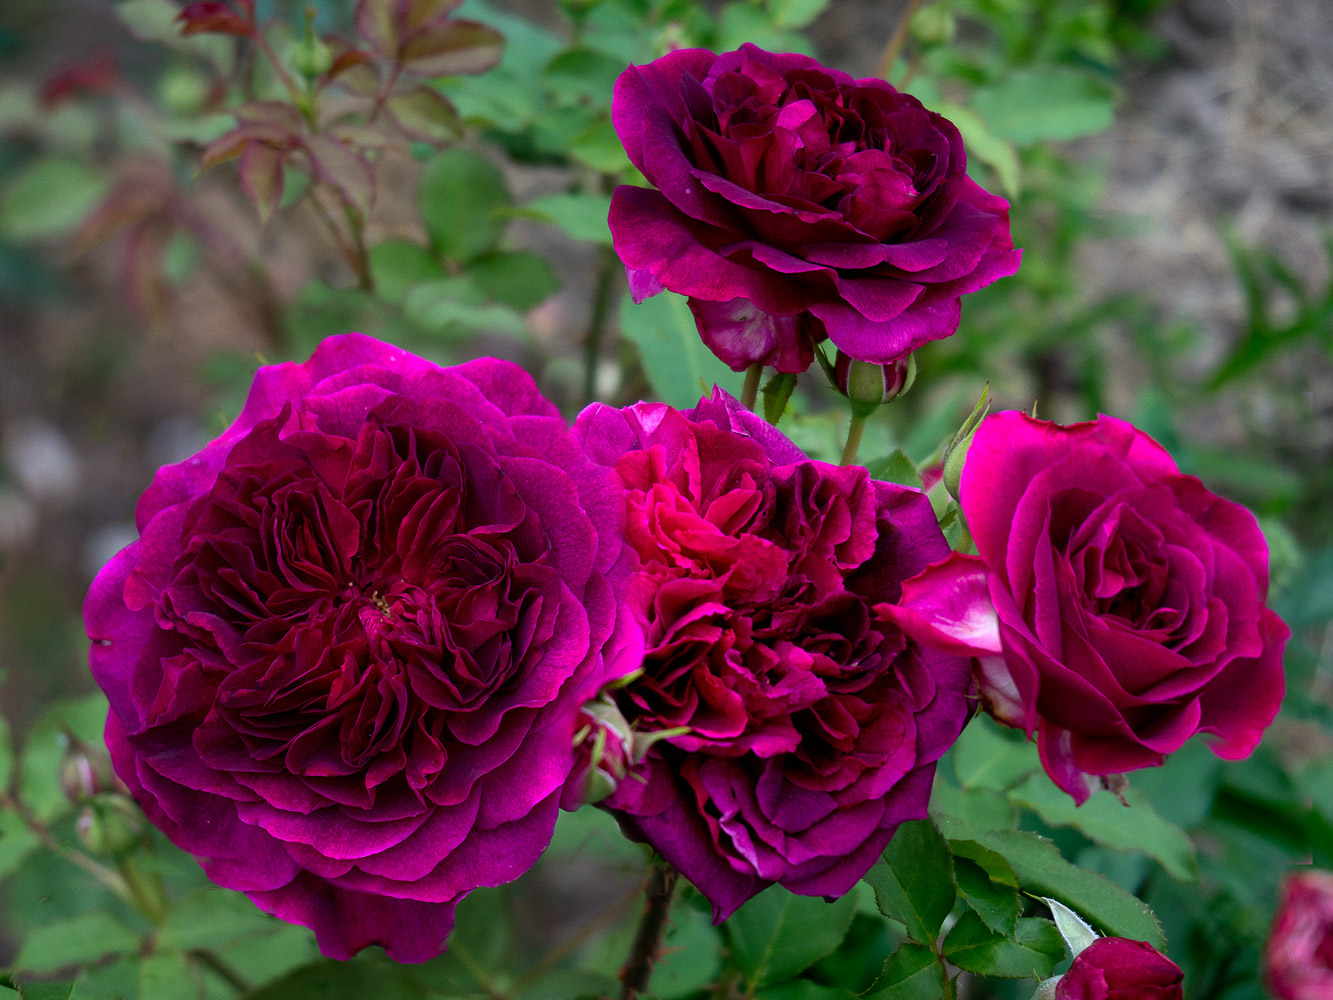 fioletowe róże